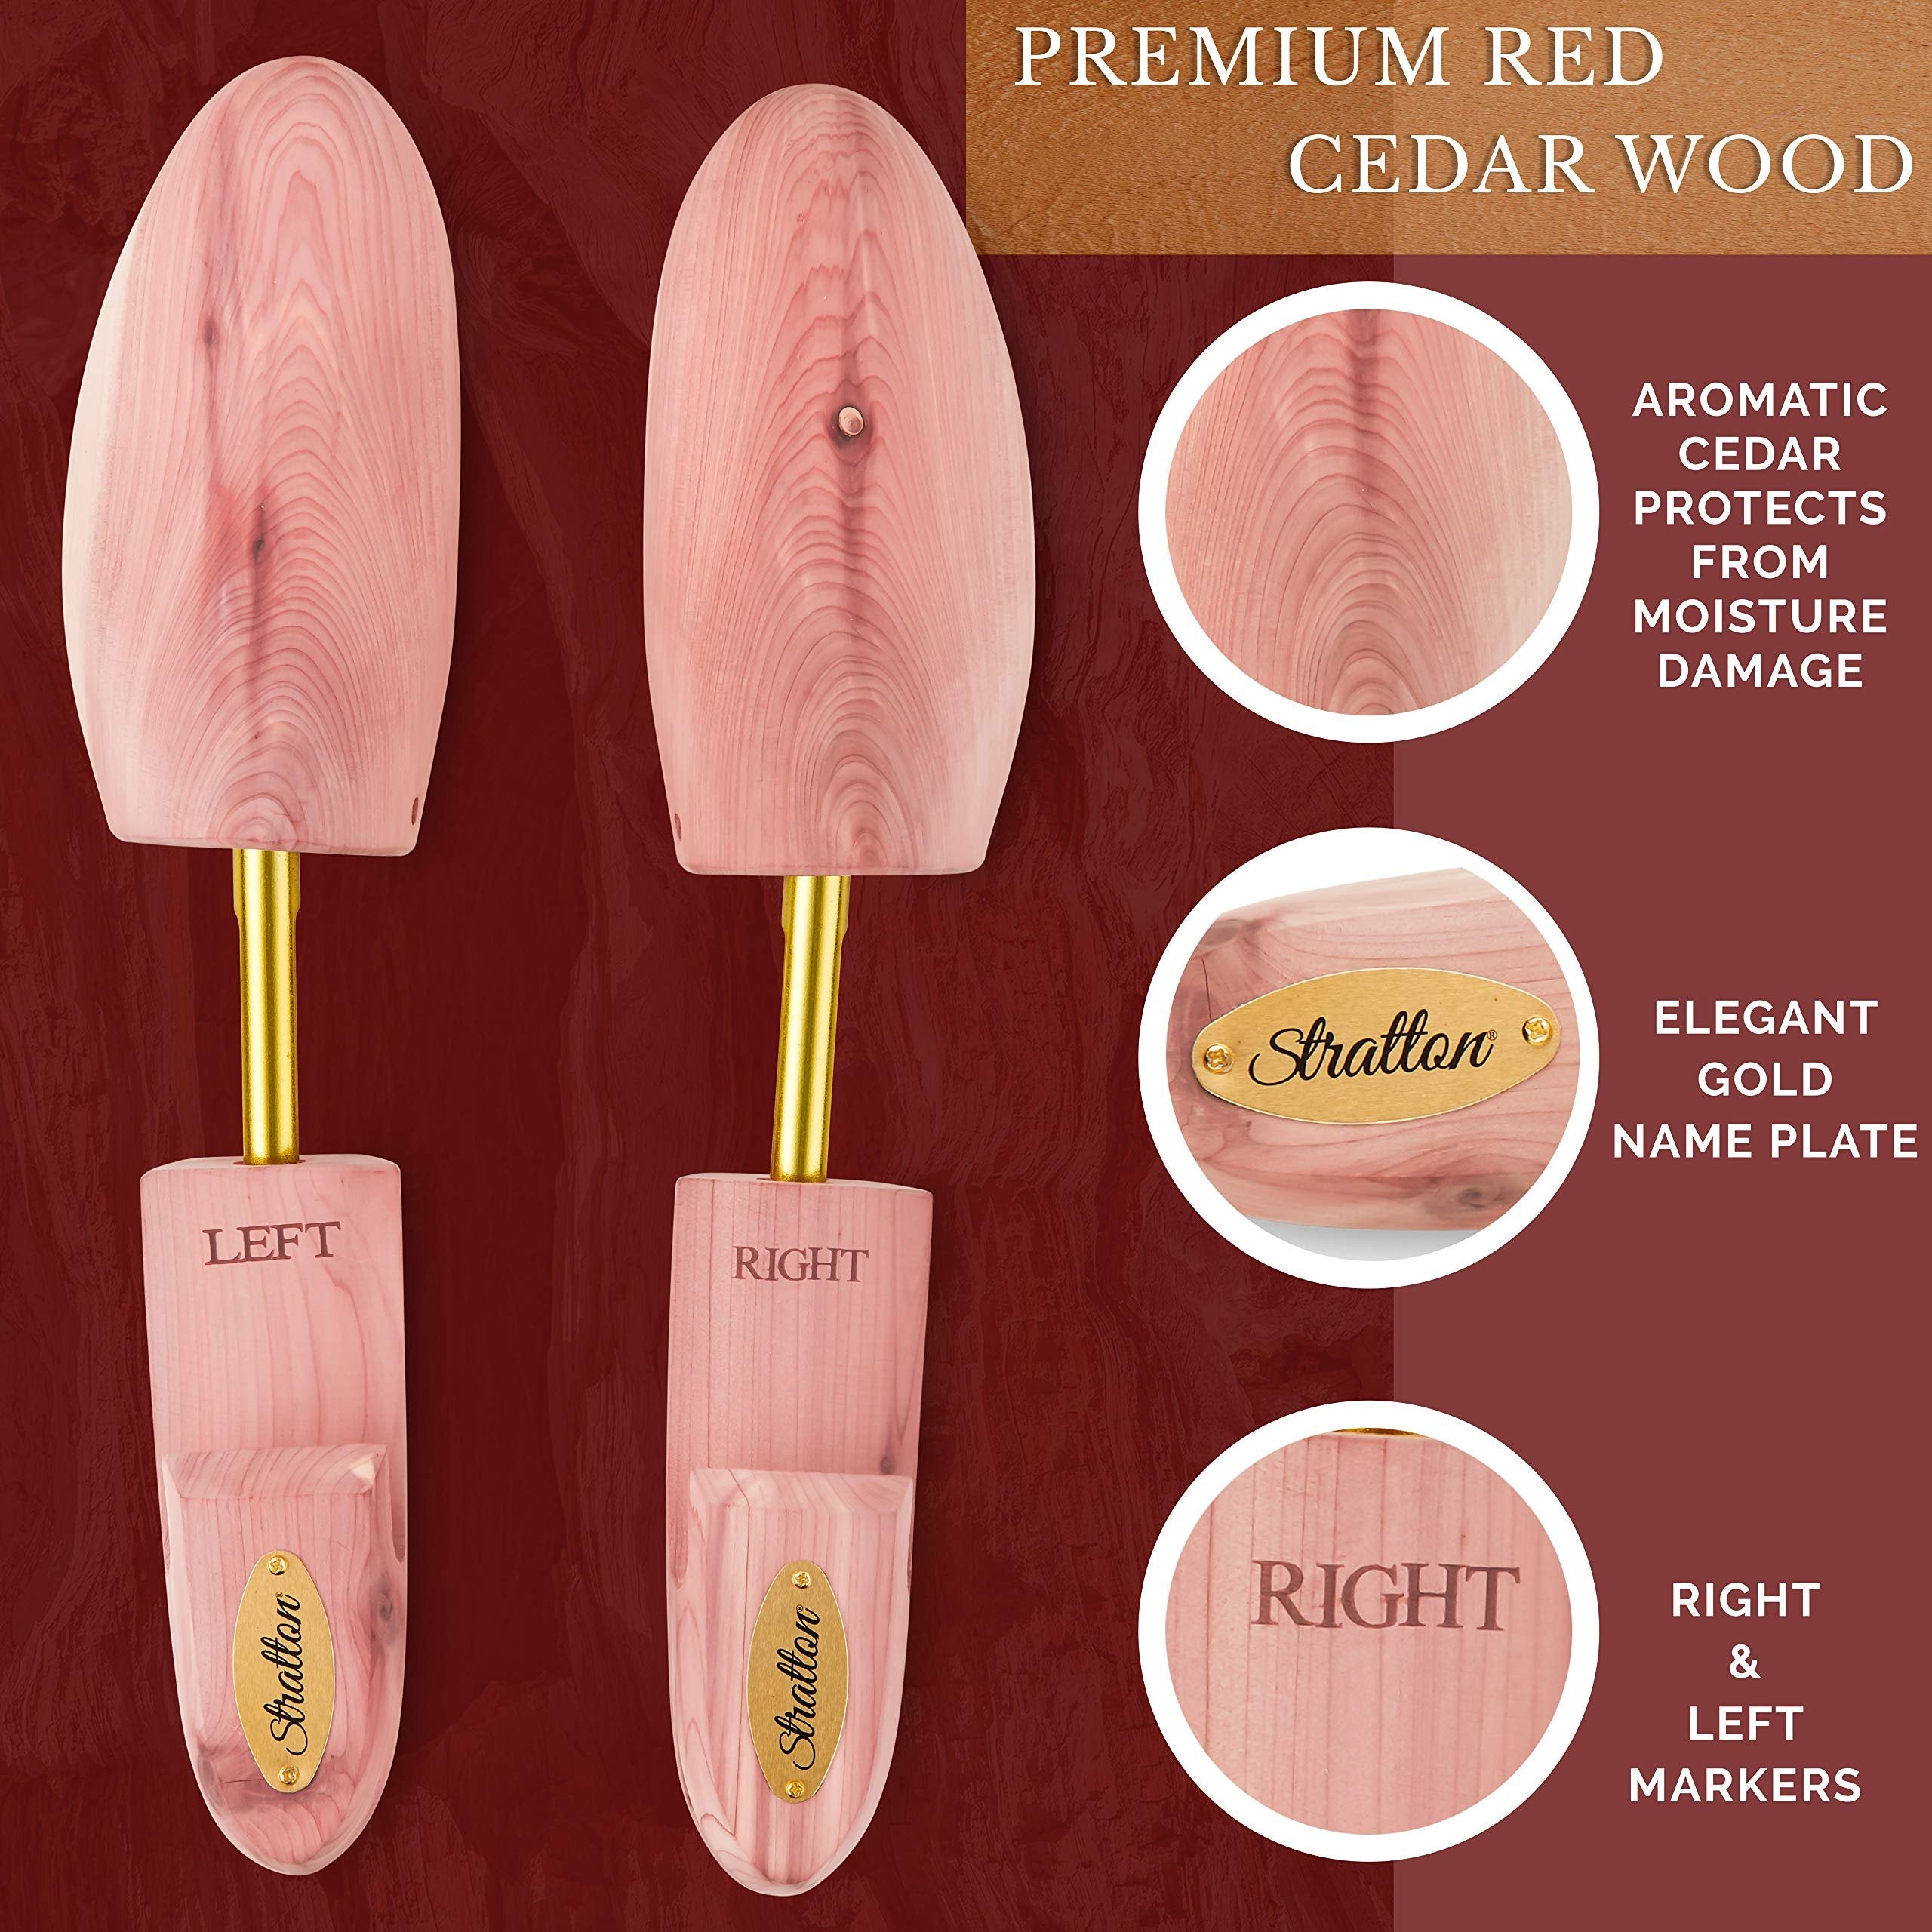 Stratton Cedar Western Boot/Shoe Tree For Men - Aromatic Red Cedar (Small / 6.5-7.5, Basic)